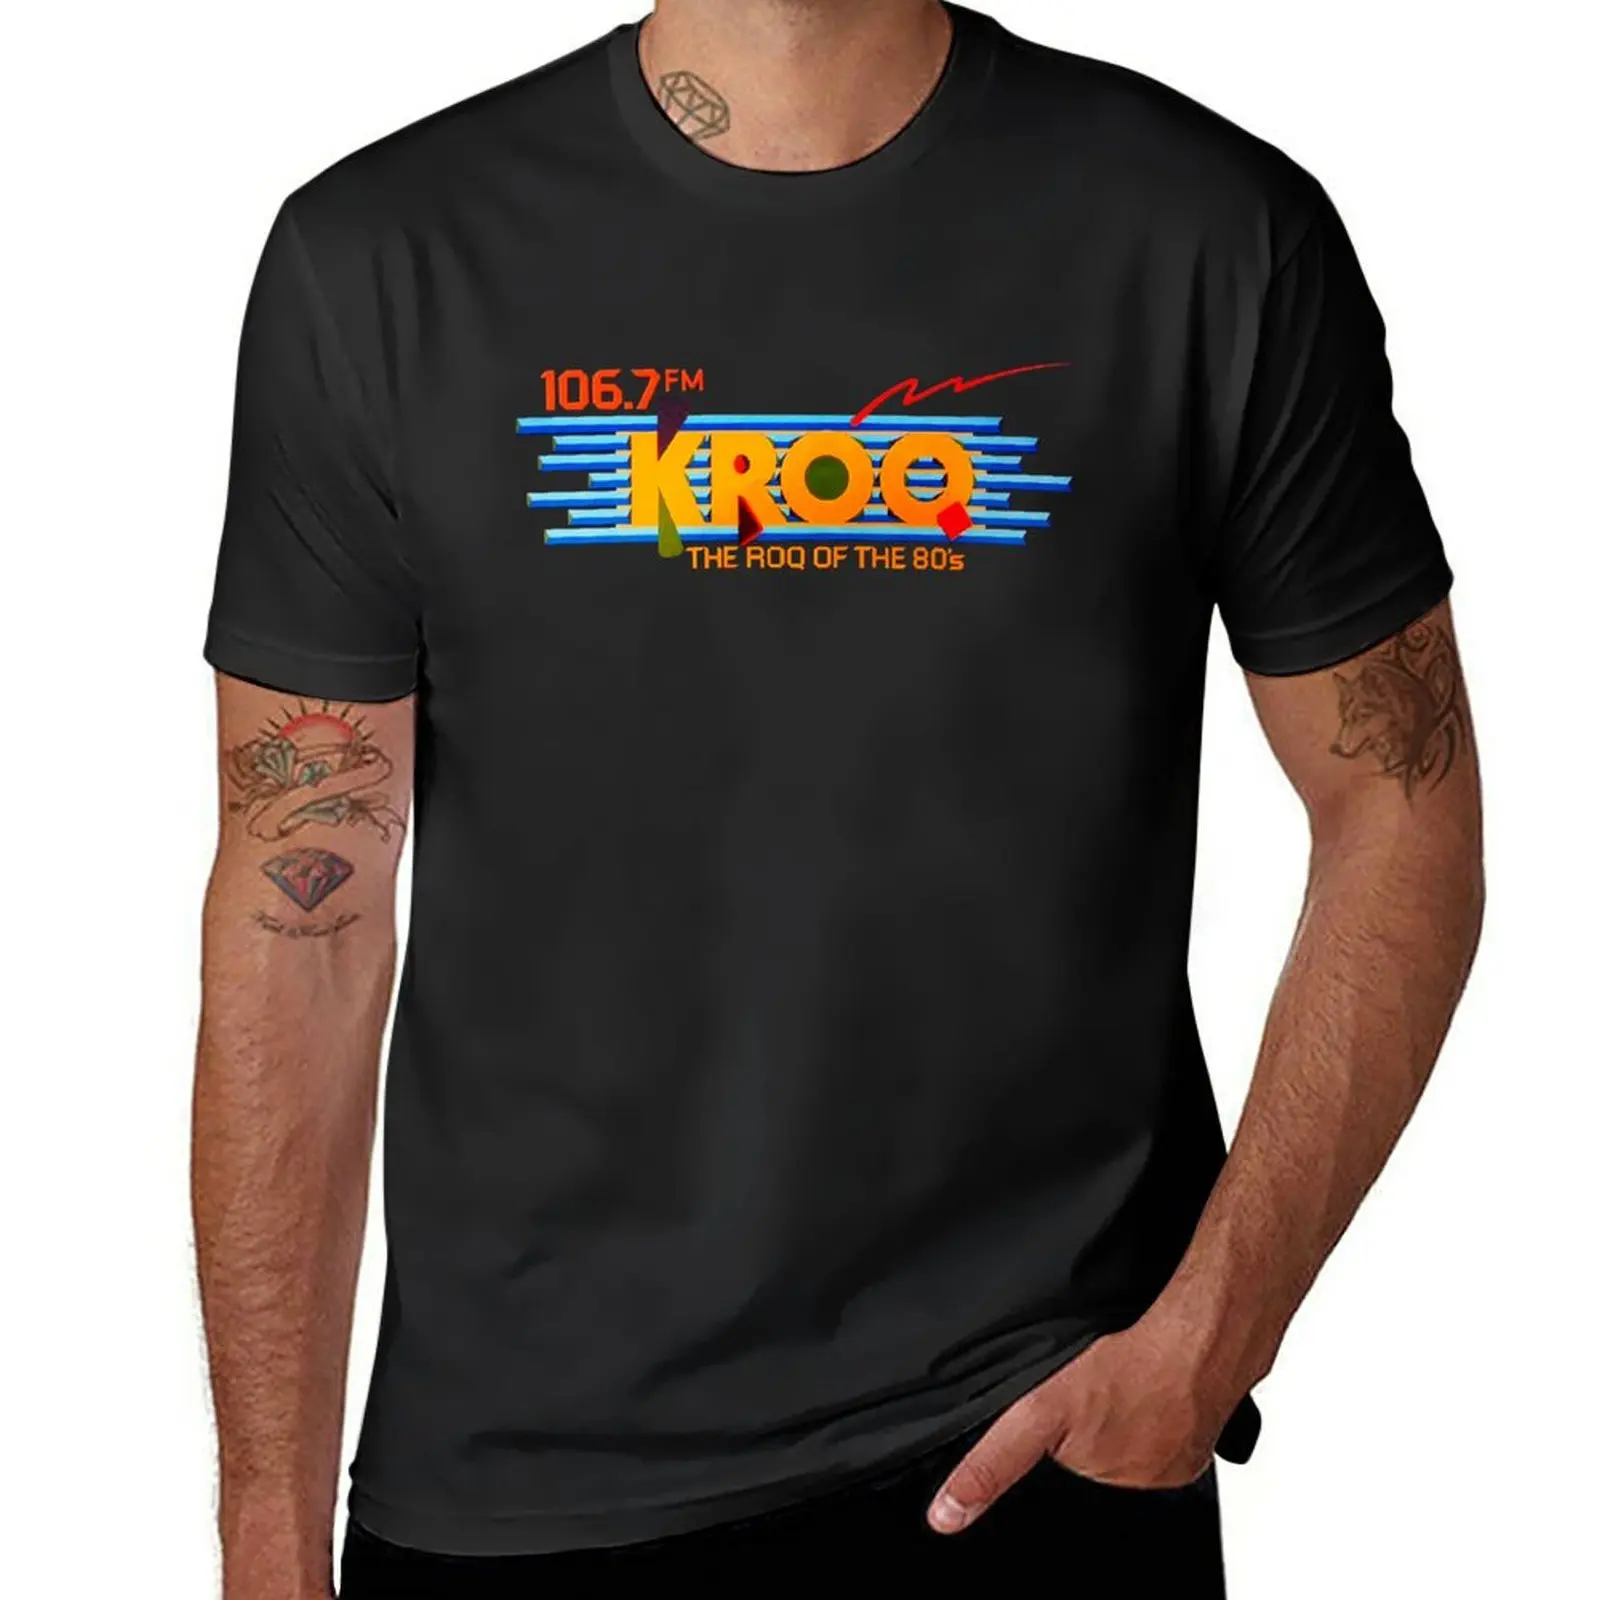 

KROQ 106.7 1980s Los Angeles new wave alternative rock radio station T-Shirt summer top mens funny t shirts